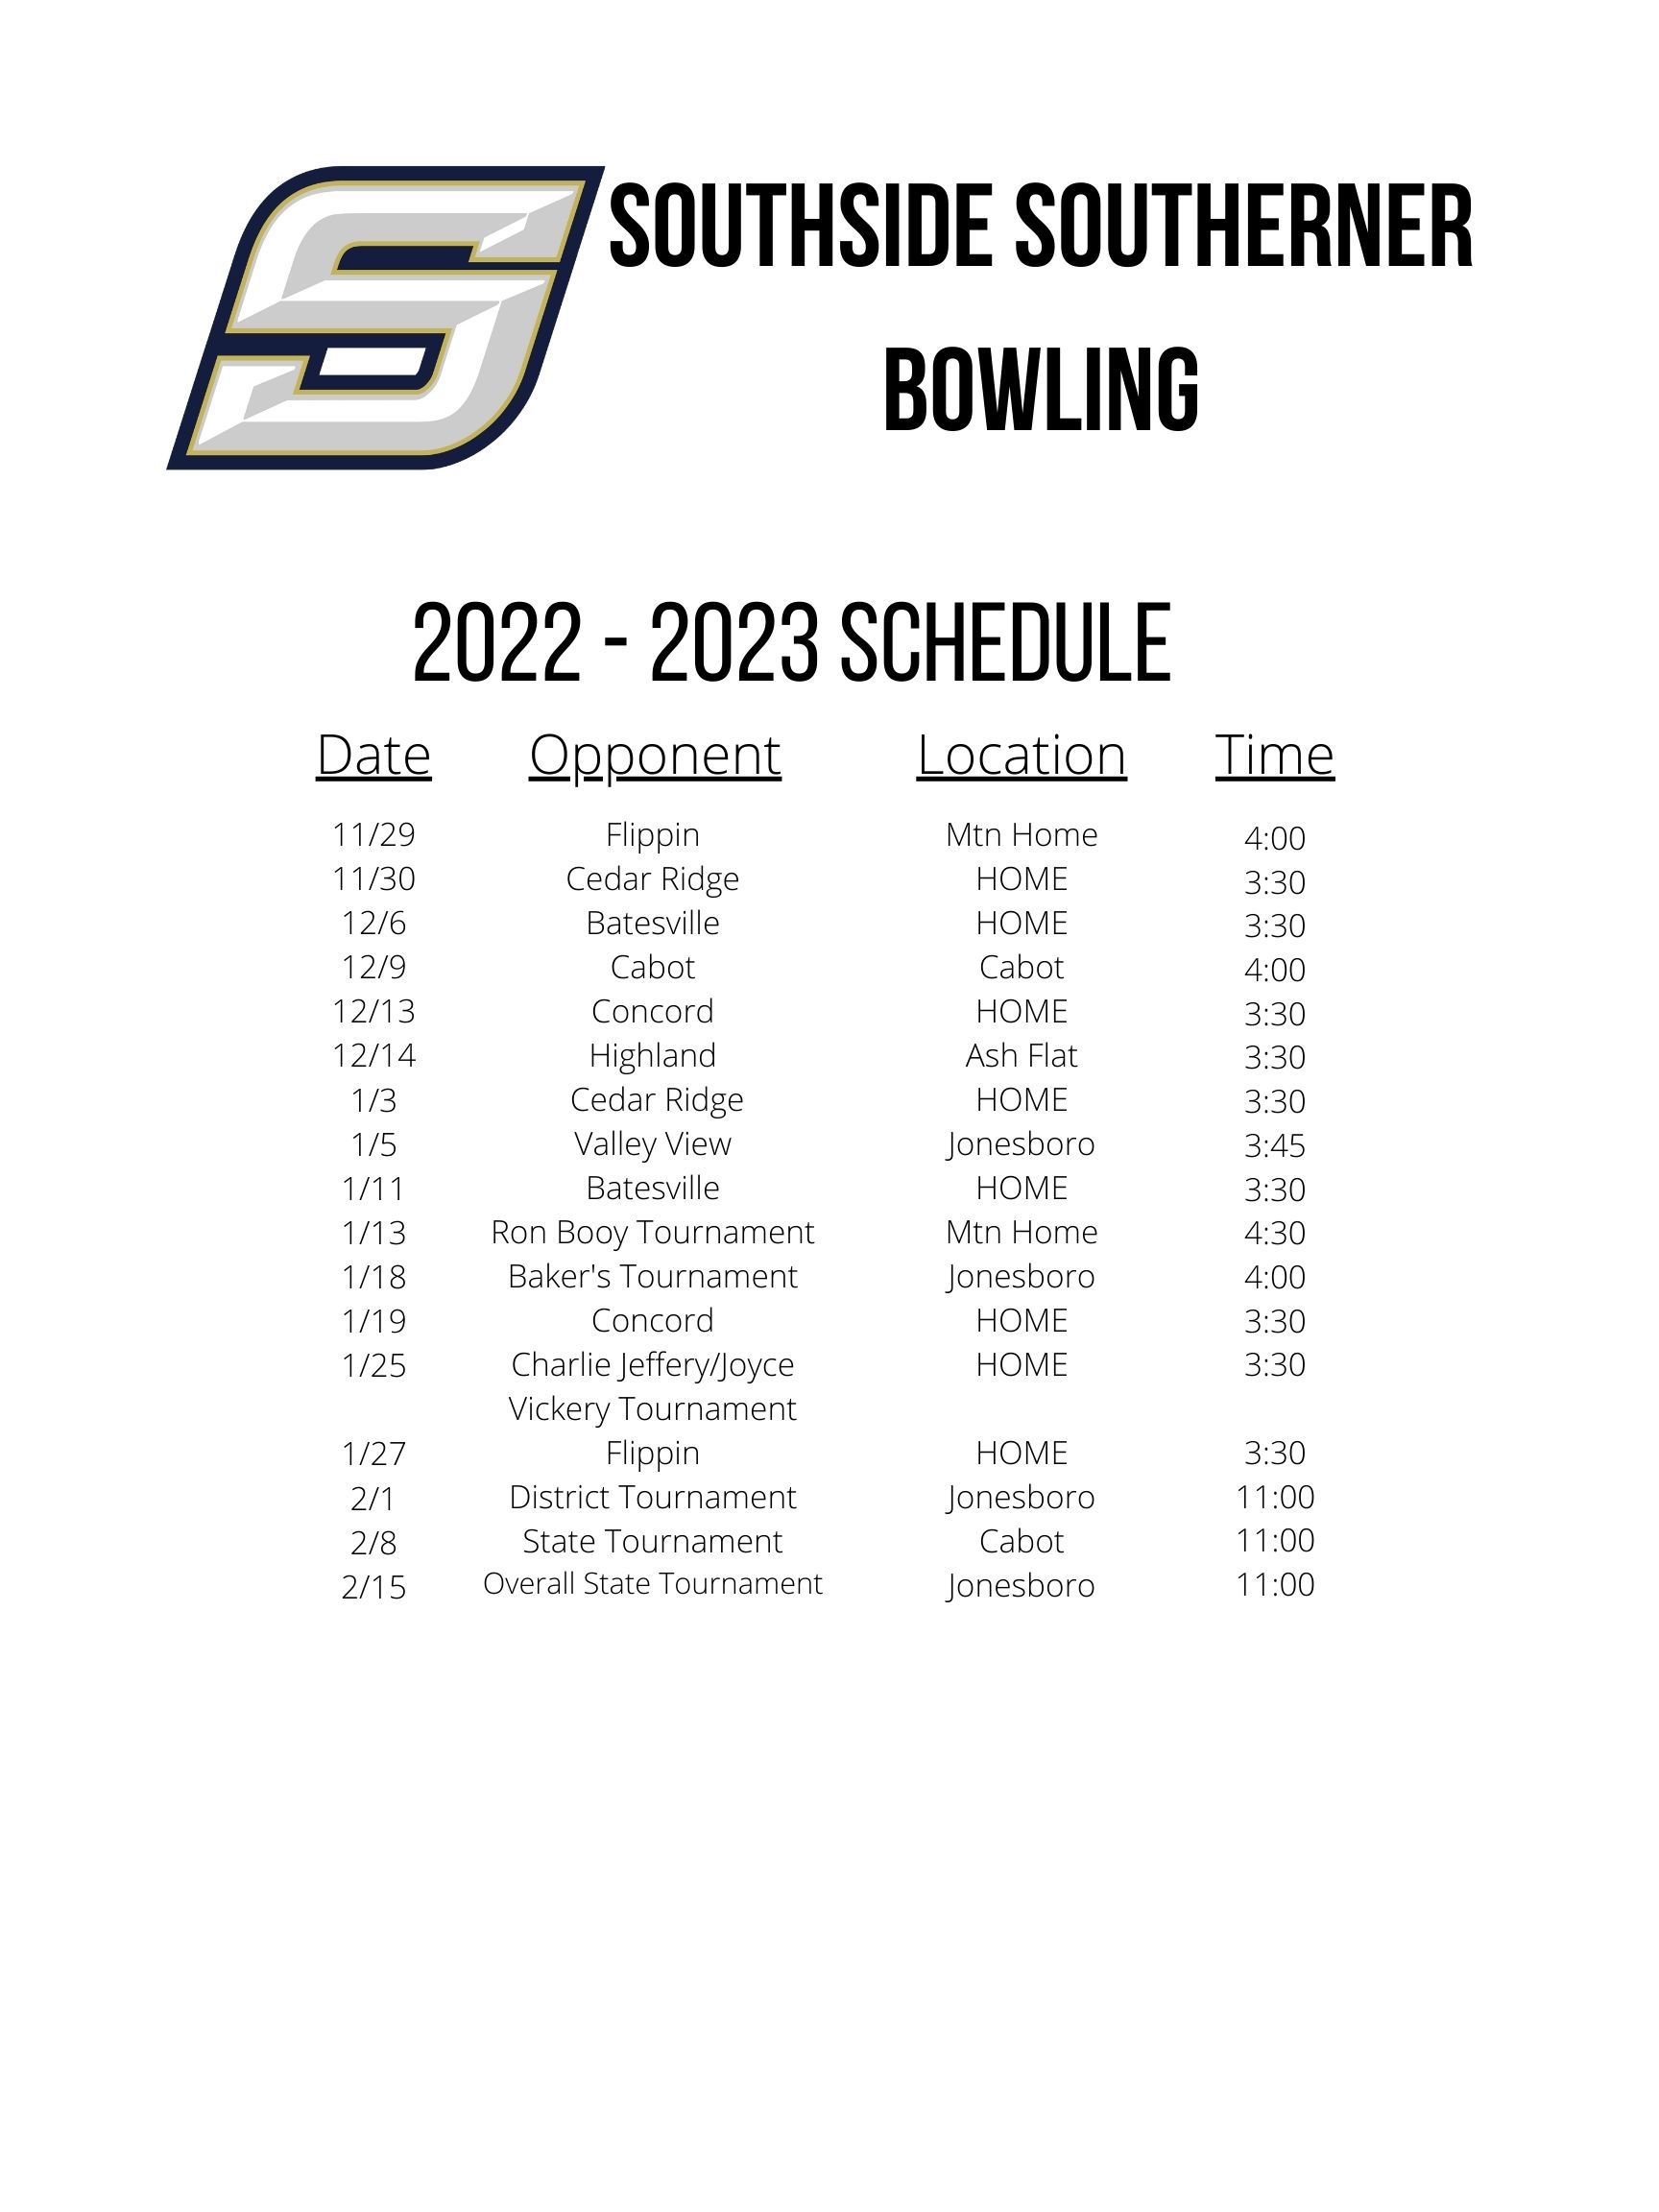 2022-2023 Bowling Schedule